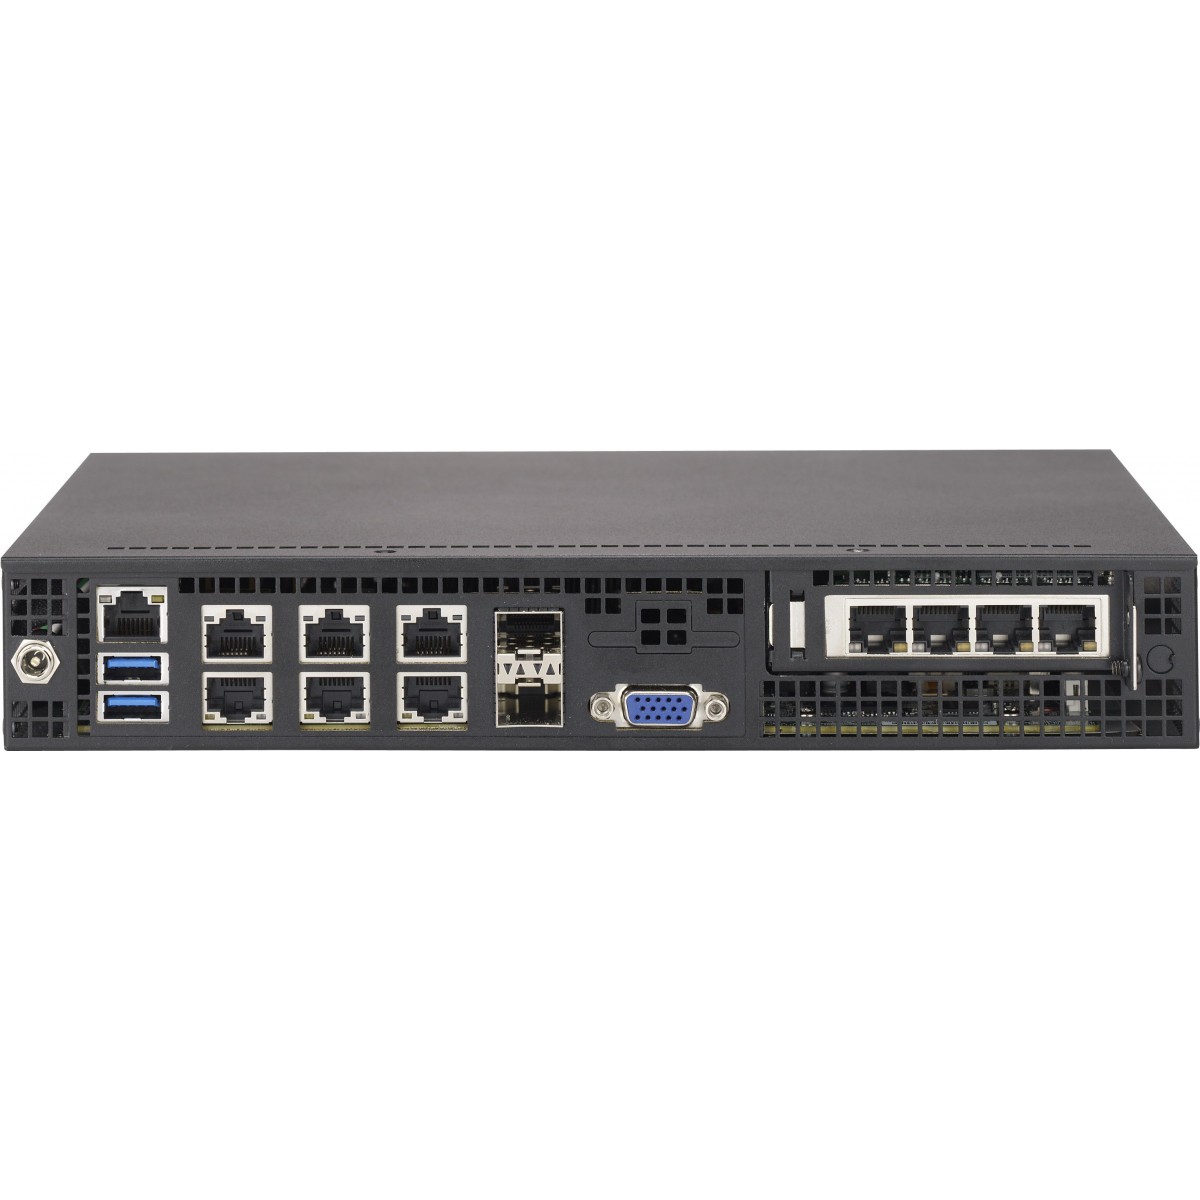 Supermicro CSE-E300 - Rack - Server - Black - Flex-ATX - Mini-ITX - 1U - USA - UL listed - FCC Canada - CUL listed Germany - TUV